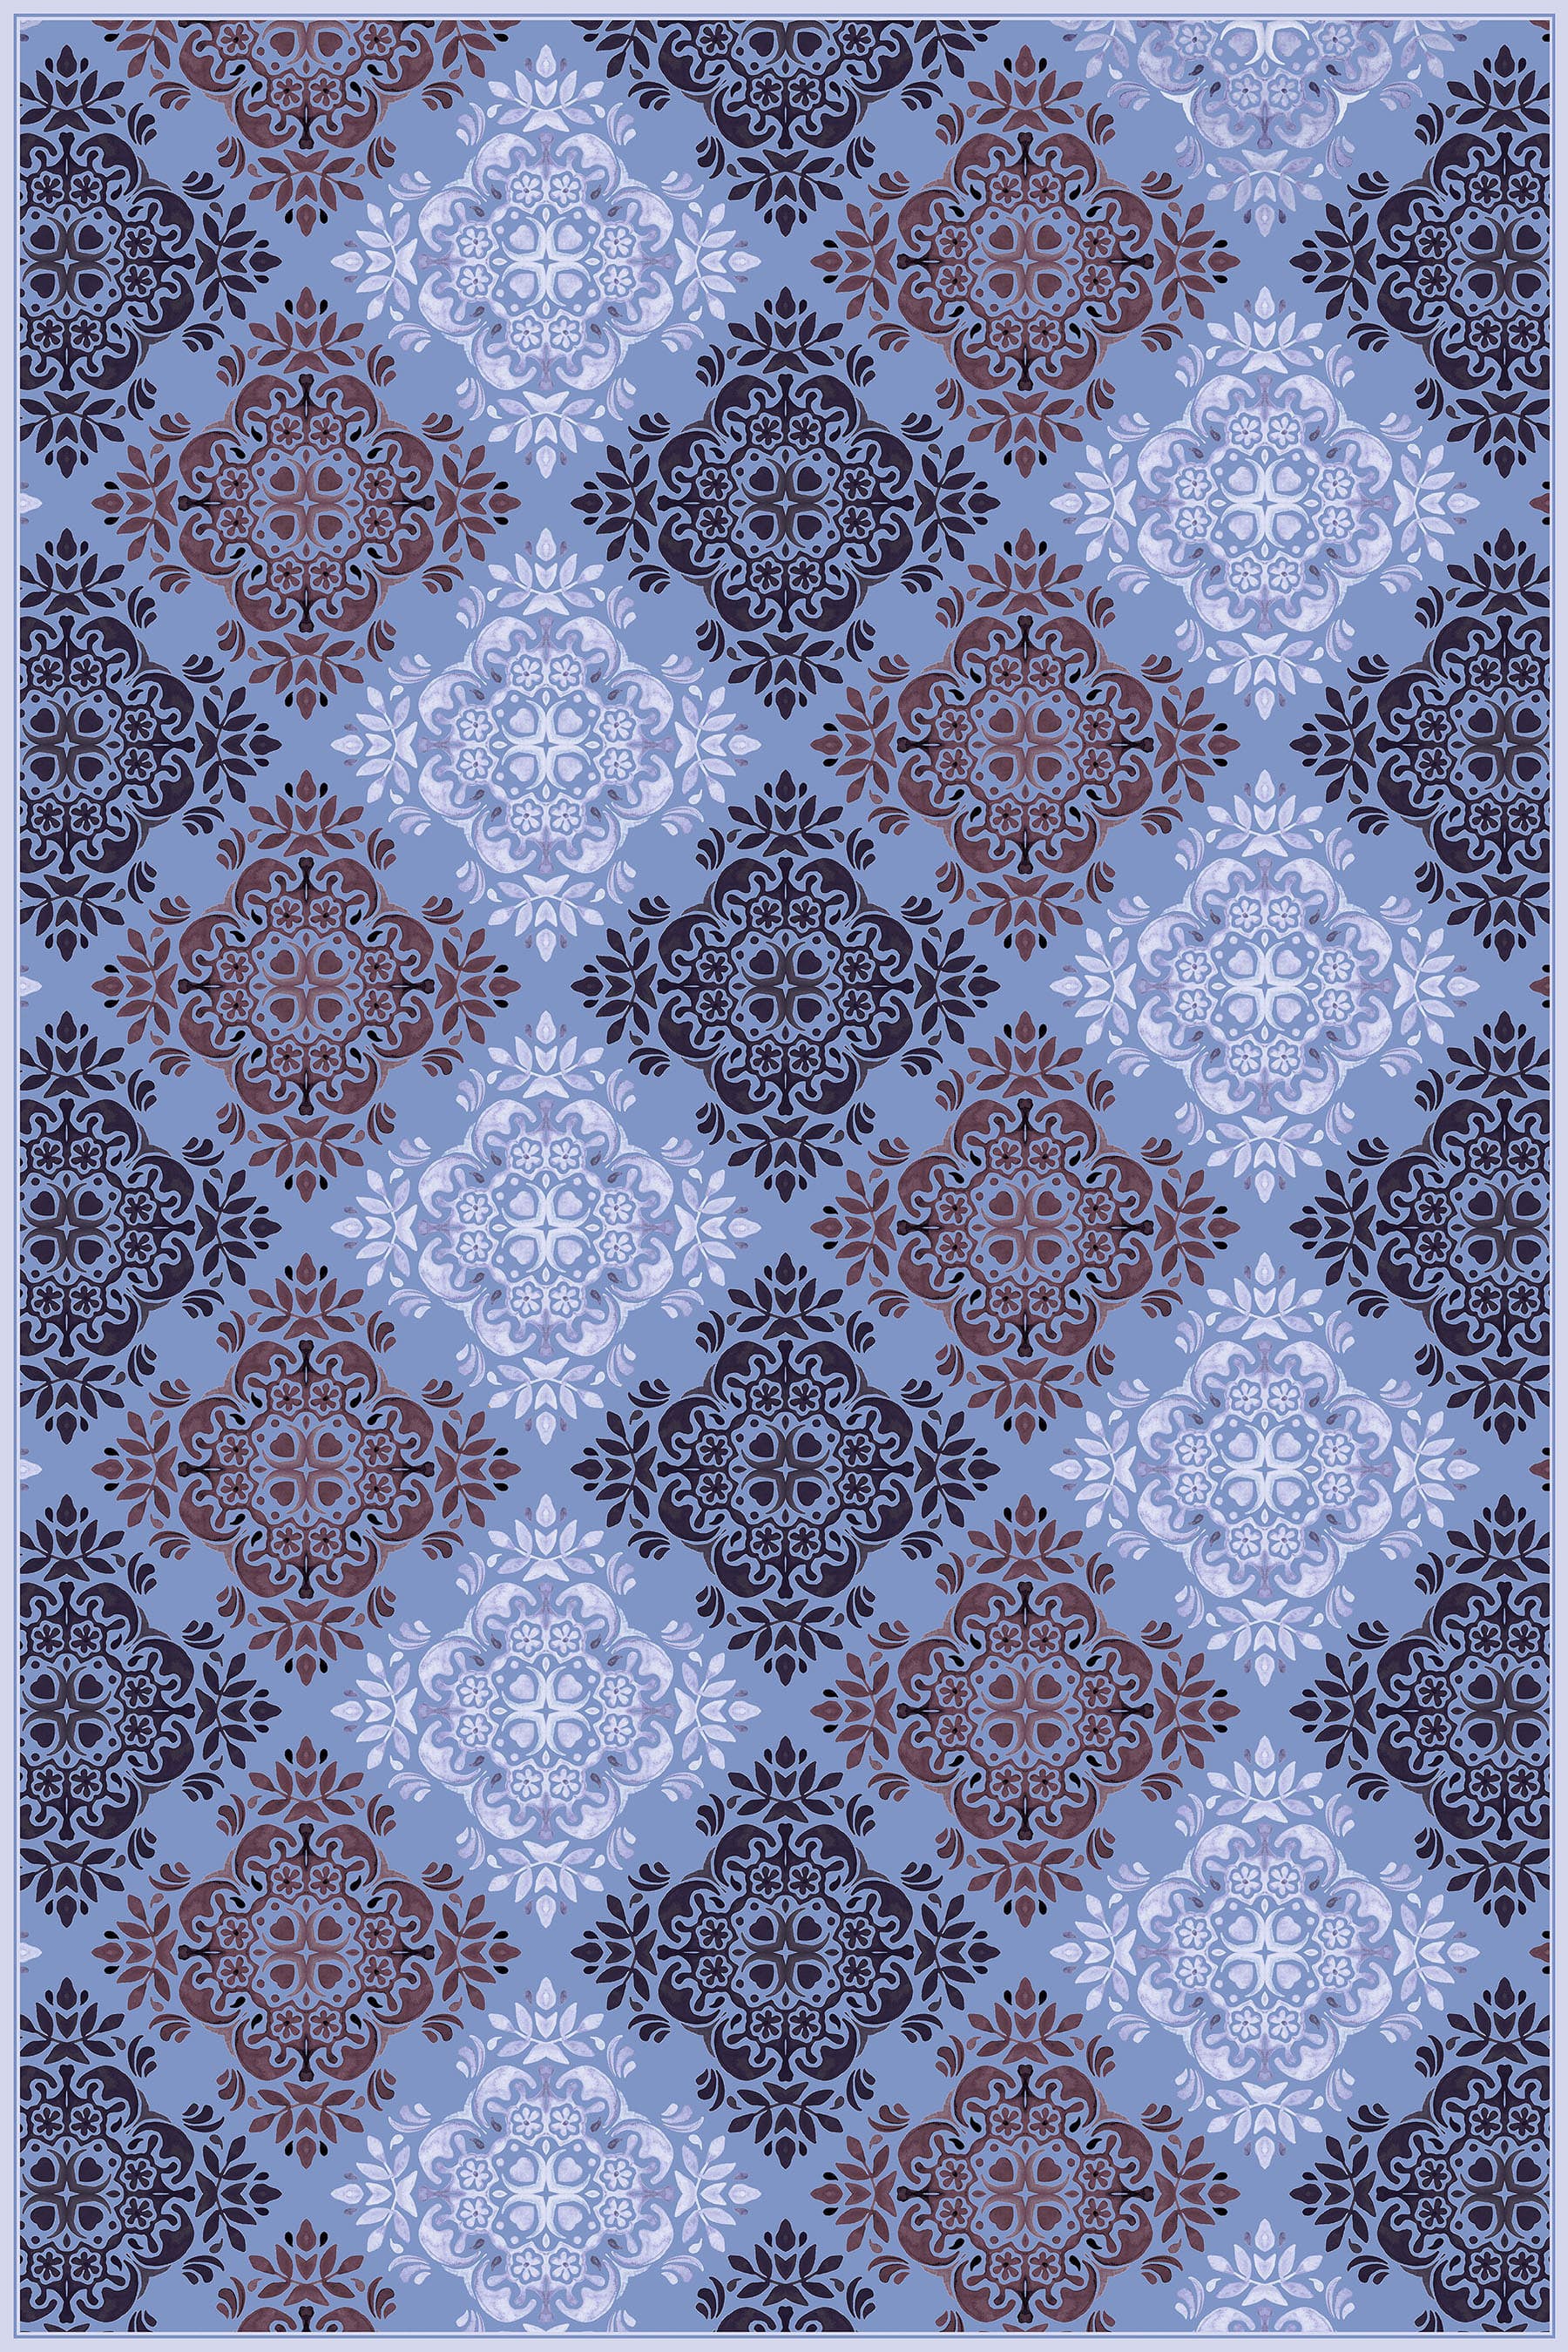 Purple Geometric Print Cotton Table Cover